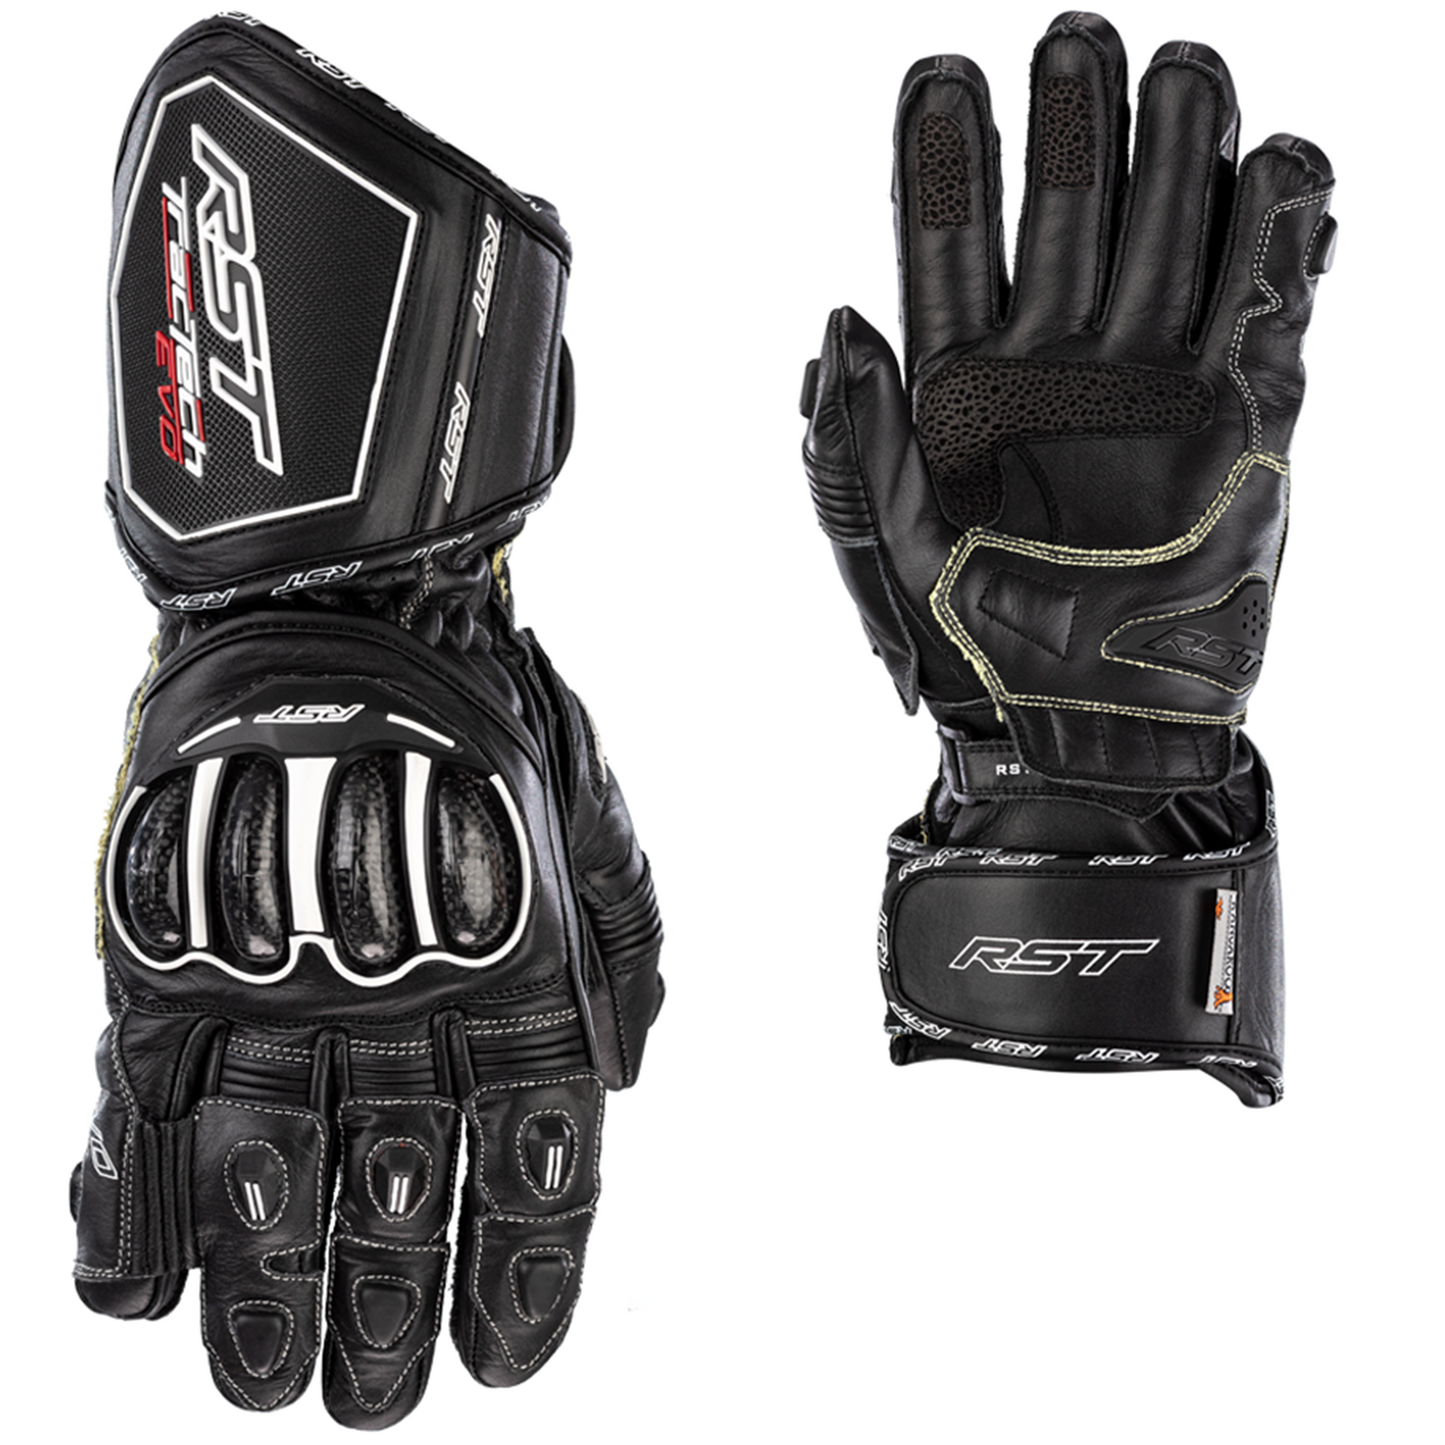 RST Tractech Evo 4 (CE) Gloves - Black